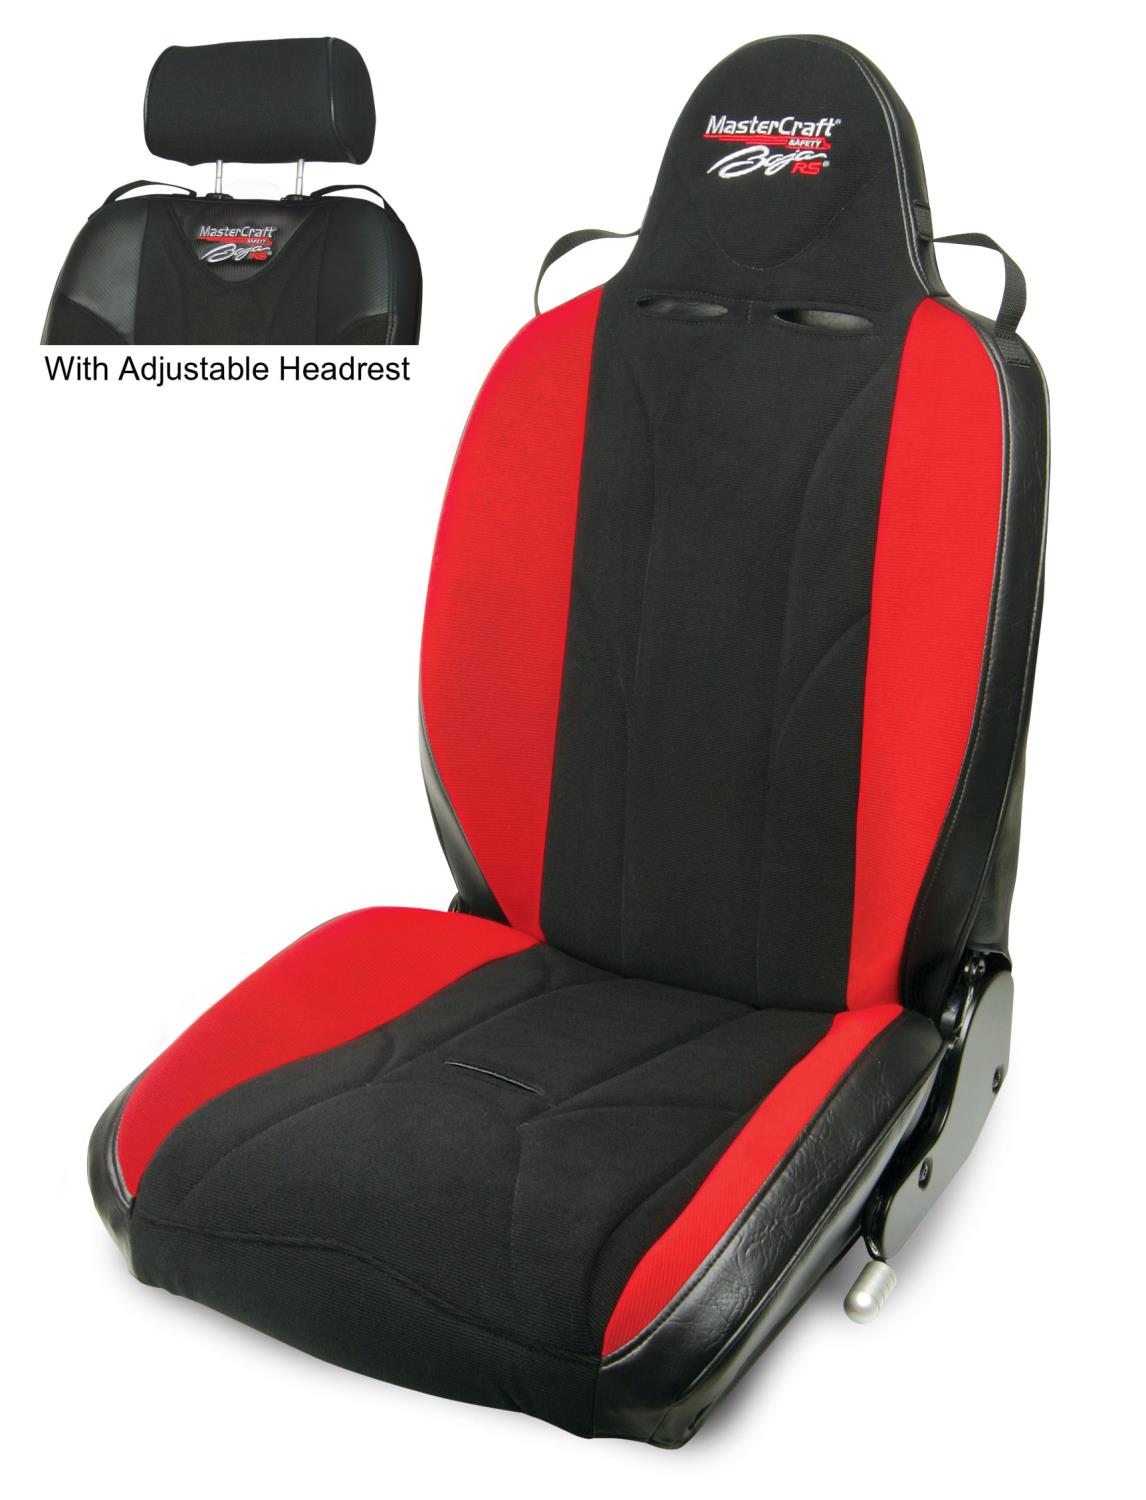 512022 MasterCraft Baja RS w/Adj. Headrest, Black w/Black Center & Red Side Panels, Recliner Lever Left, w/BRS Stitch Pattern